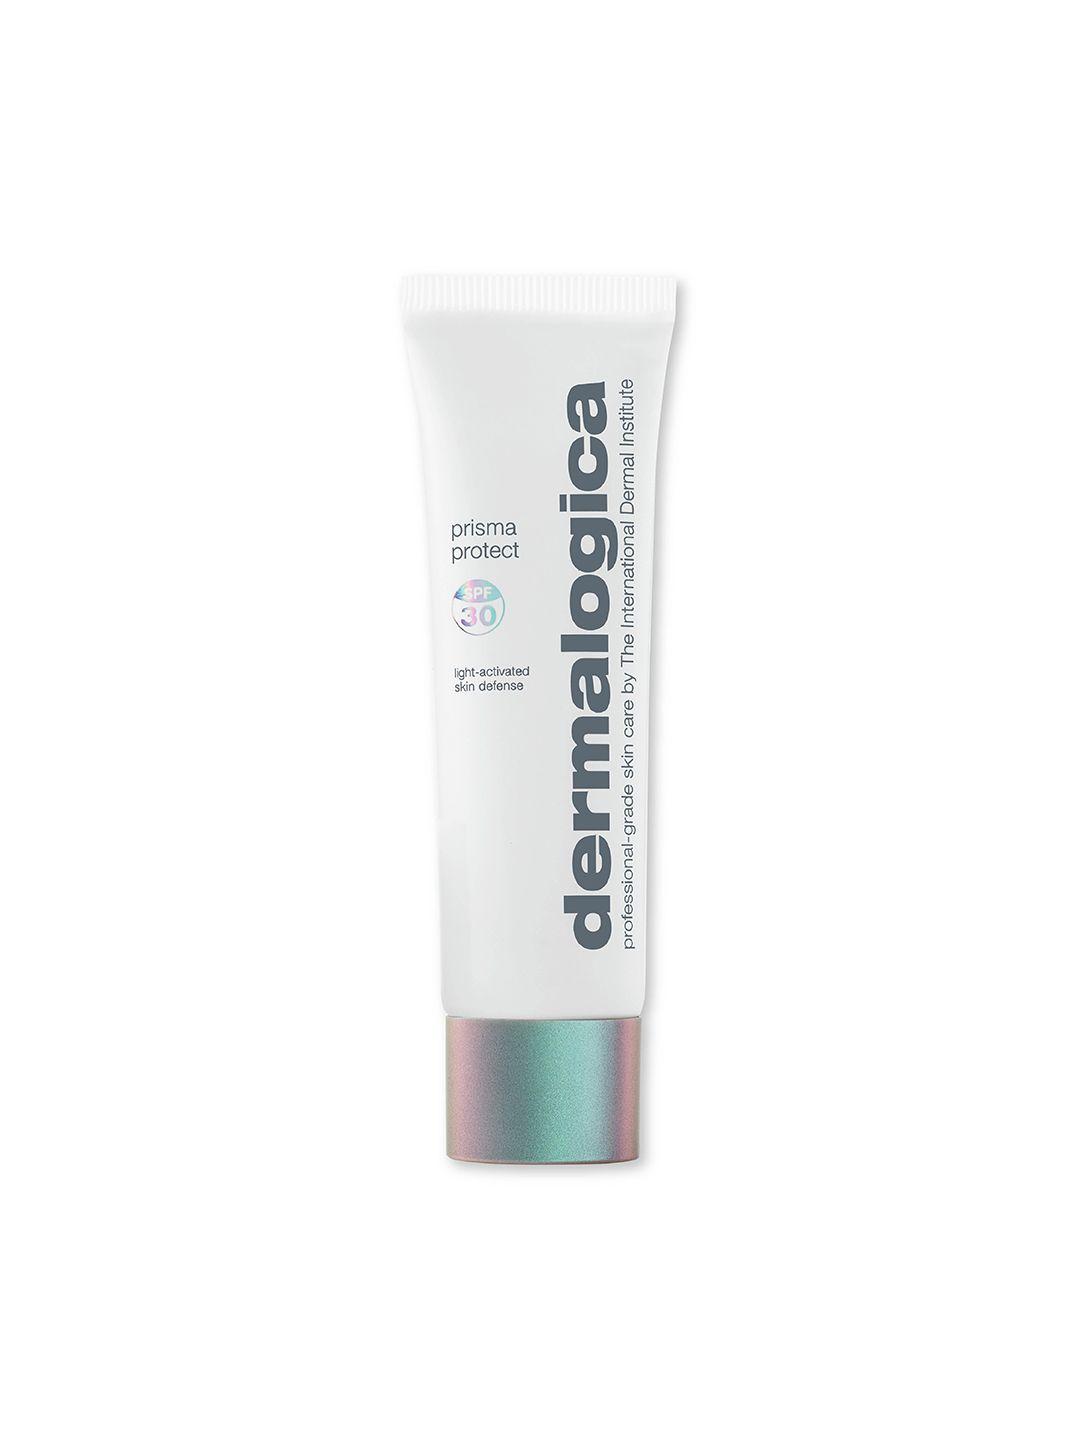 dermalogica prisma protect spf30 sunscreen with sage & green tea - 50 ml